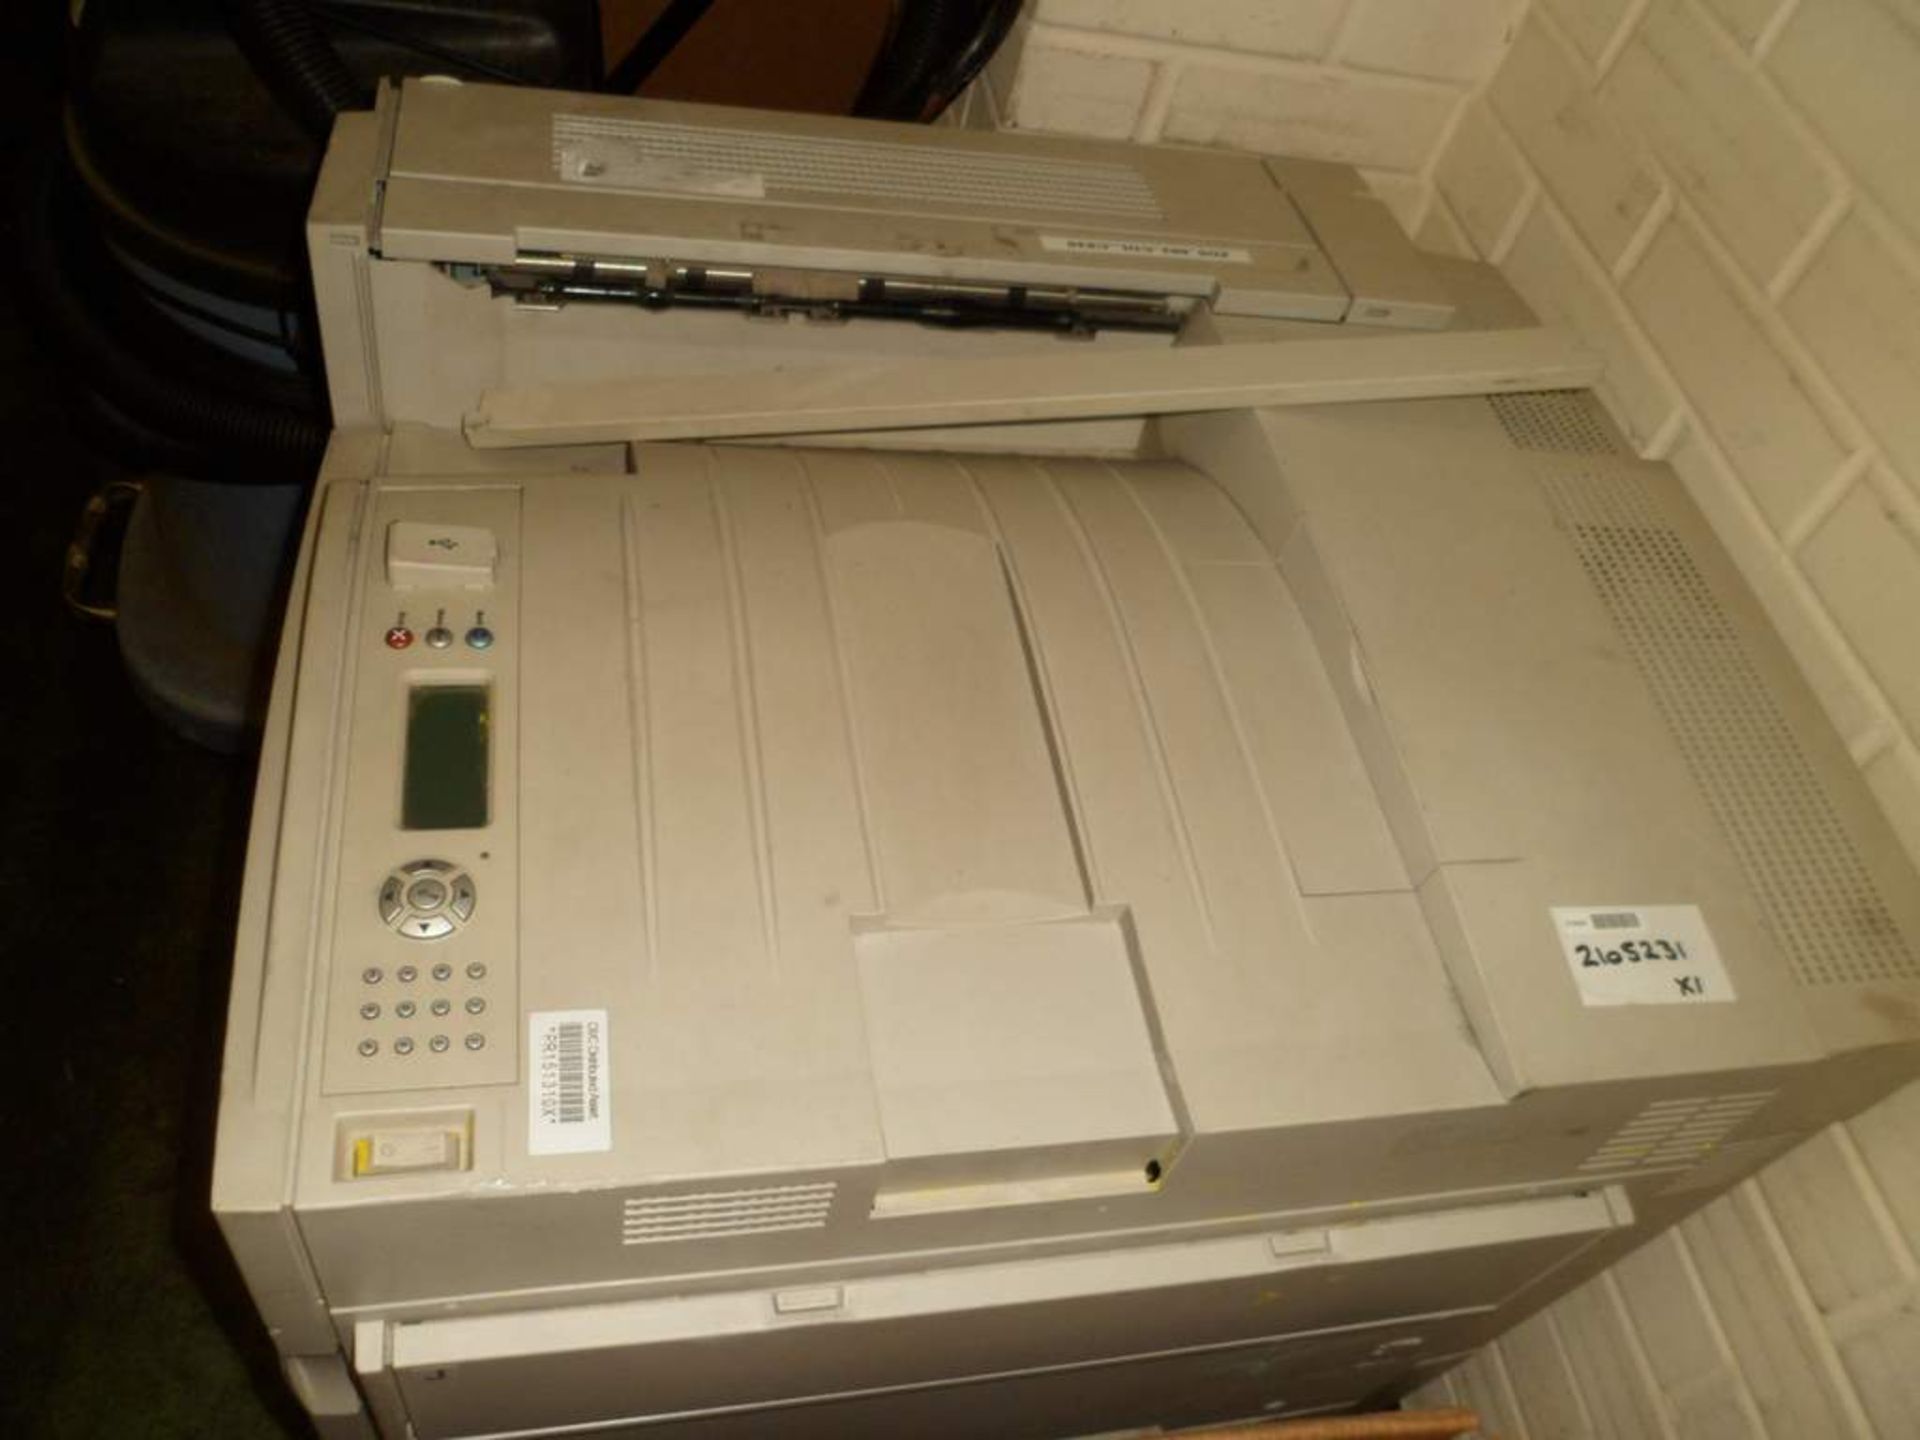 Lexmark C935 office printer - Image 2 of 3